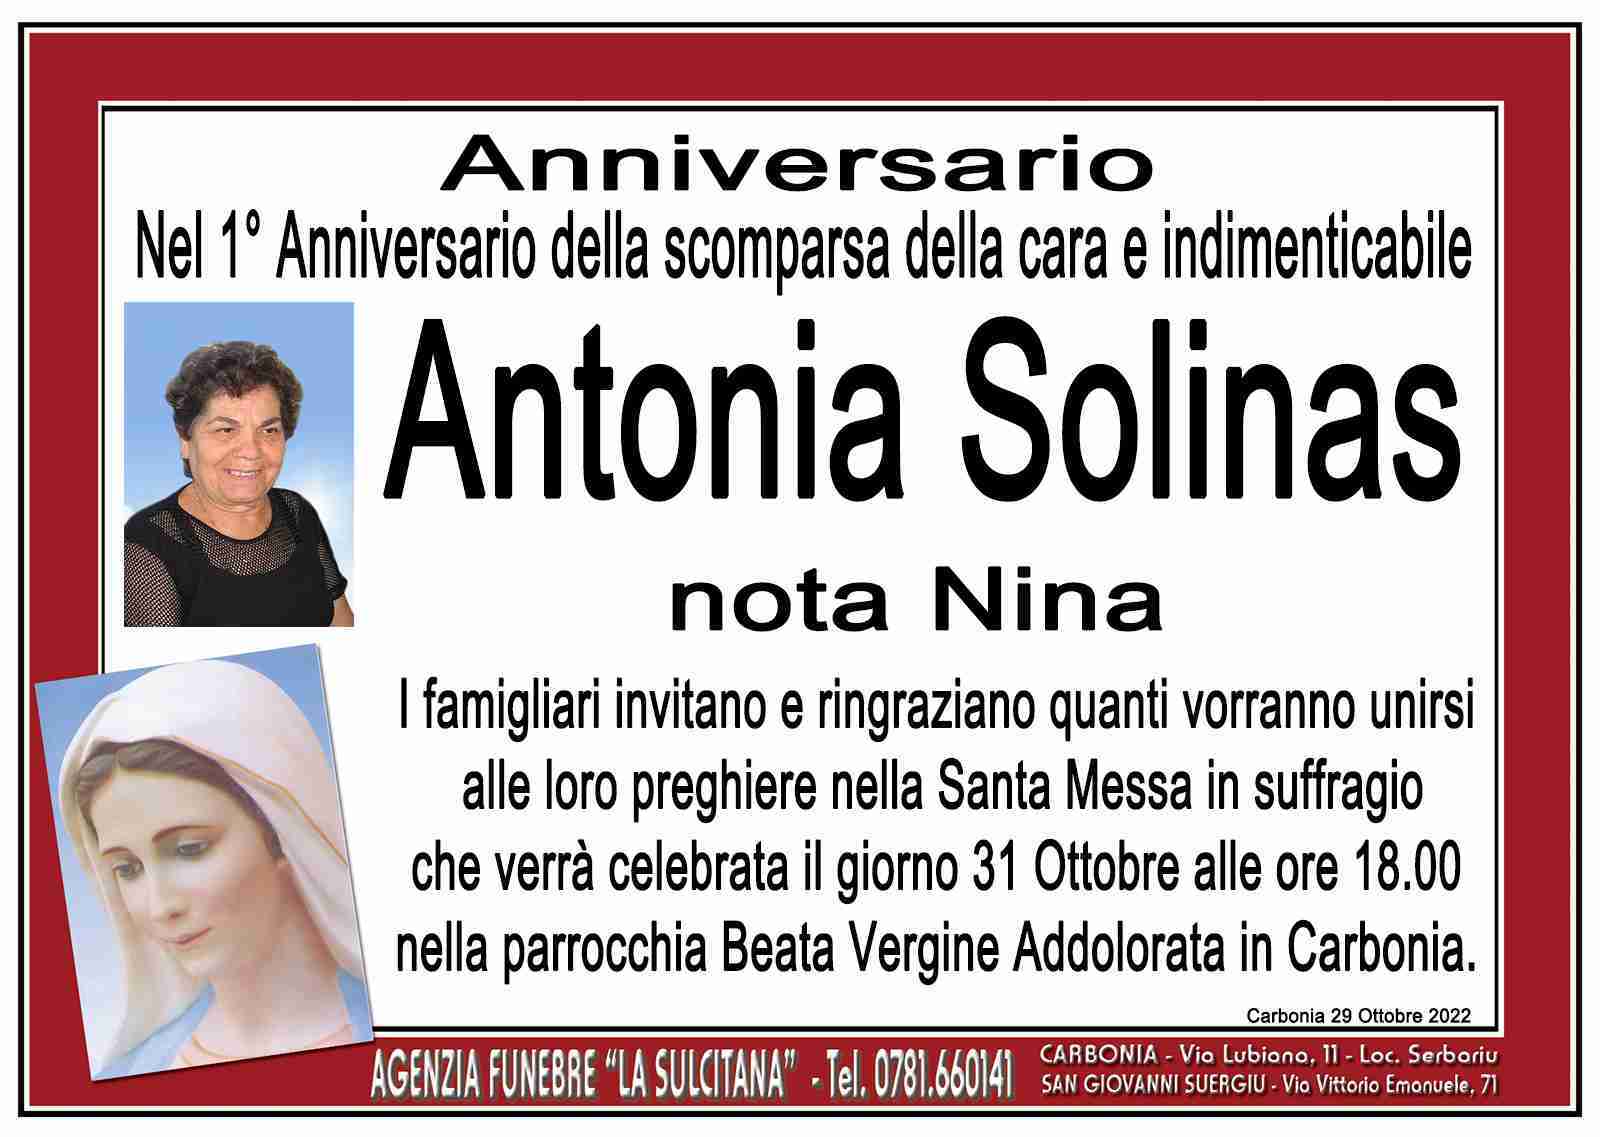 Antonia Solinas